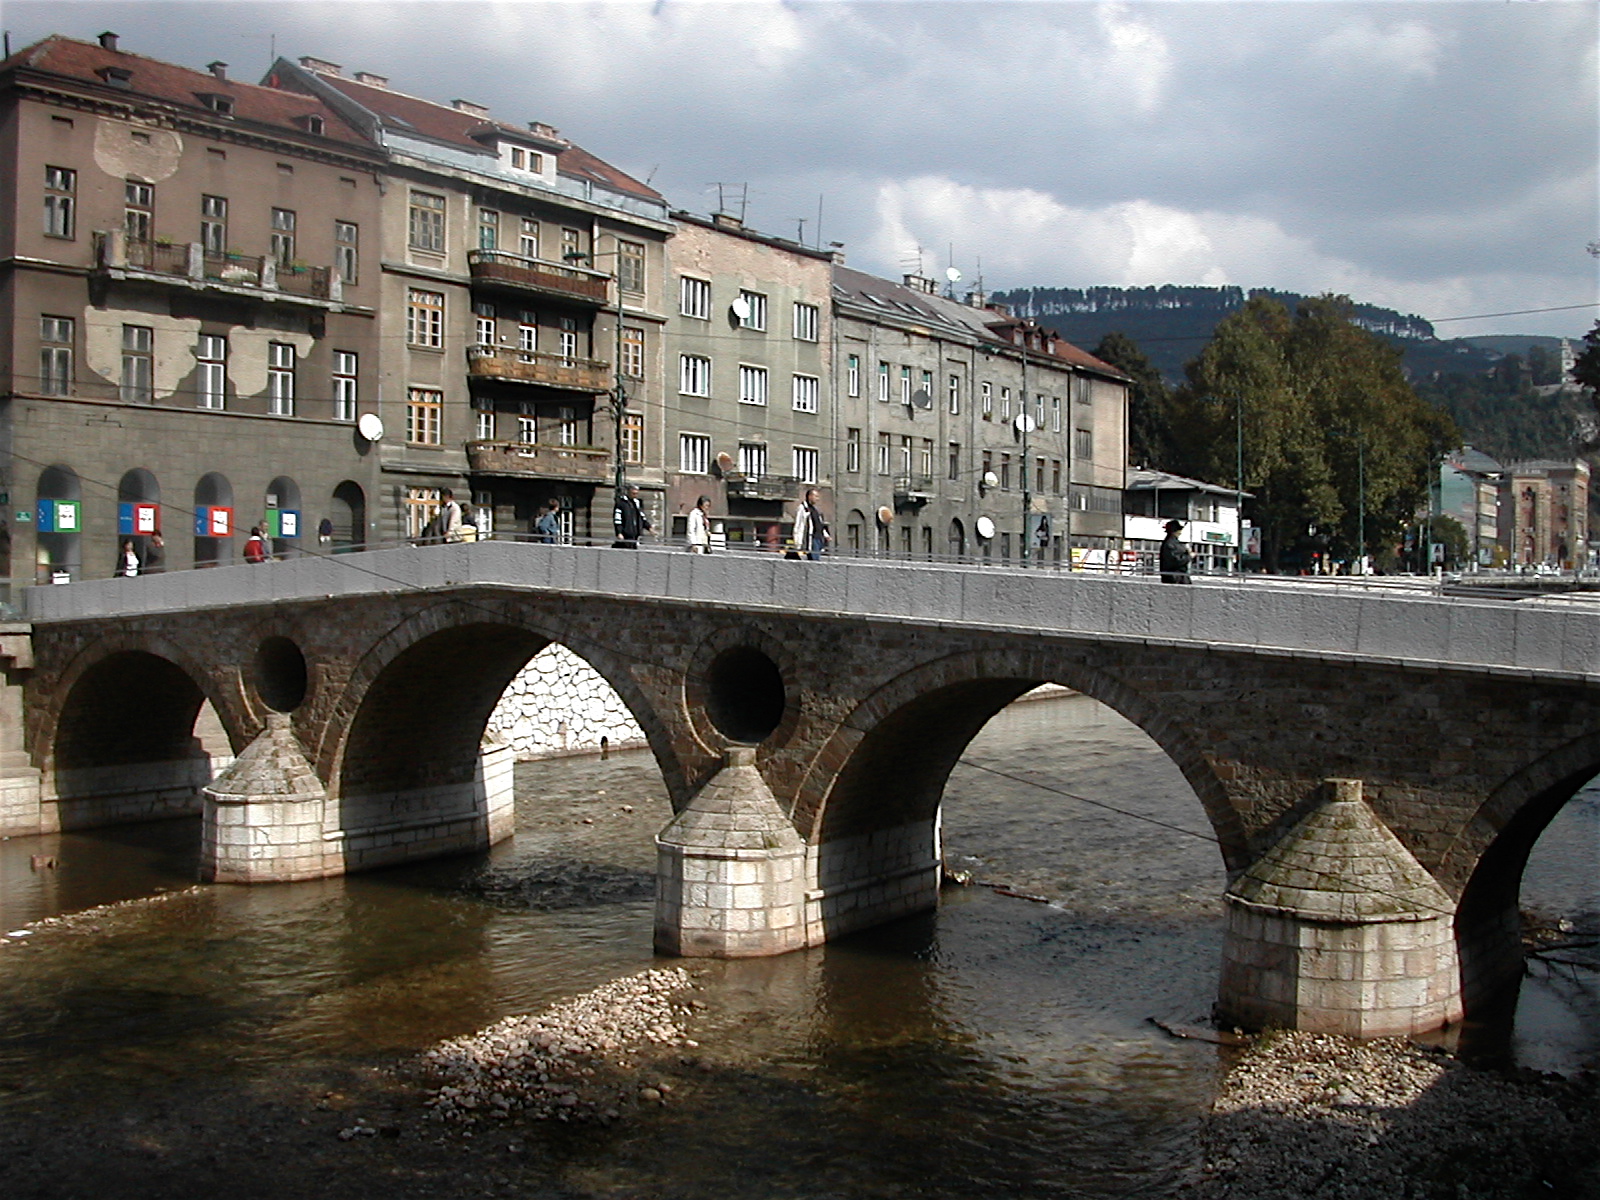 File:Sarajevo princip bruecke.jpg - Wikimedia Commons